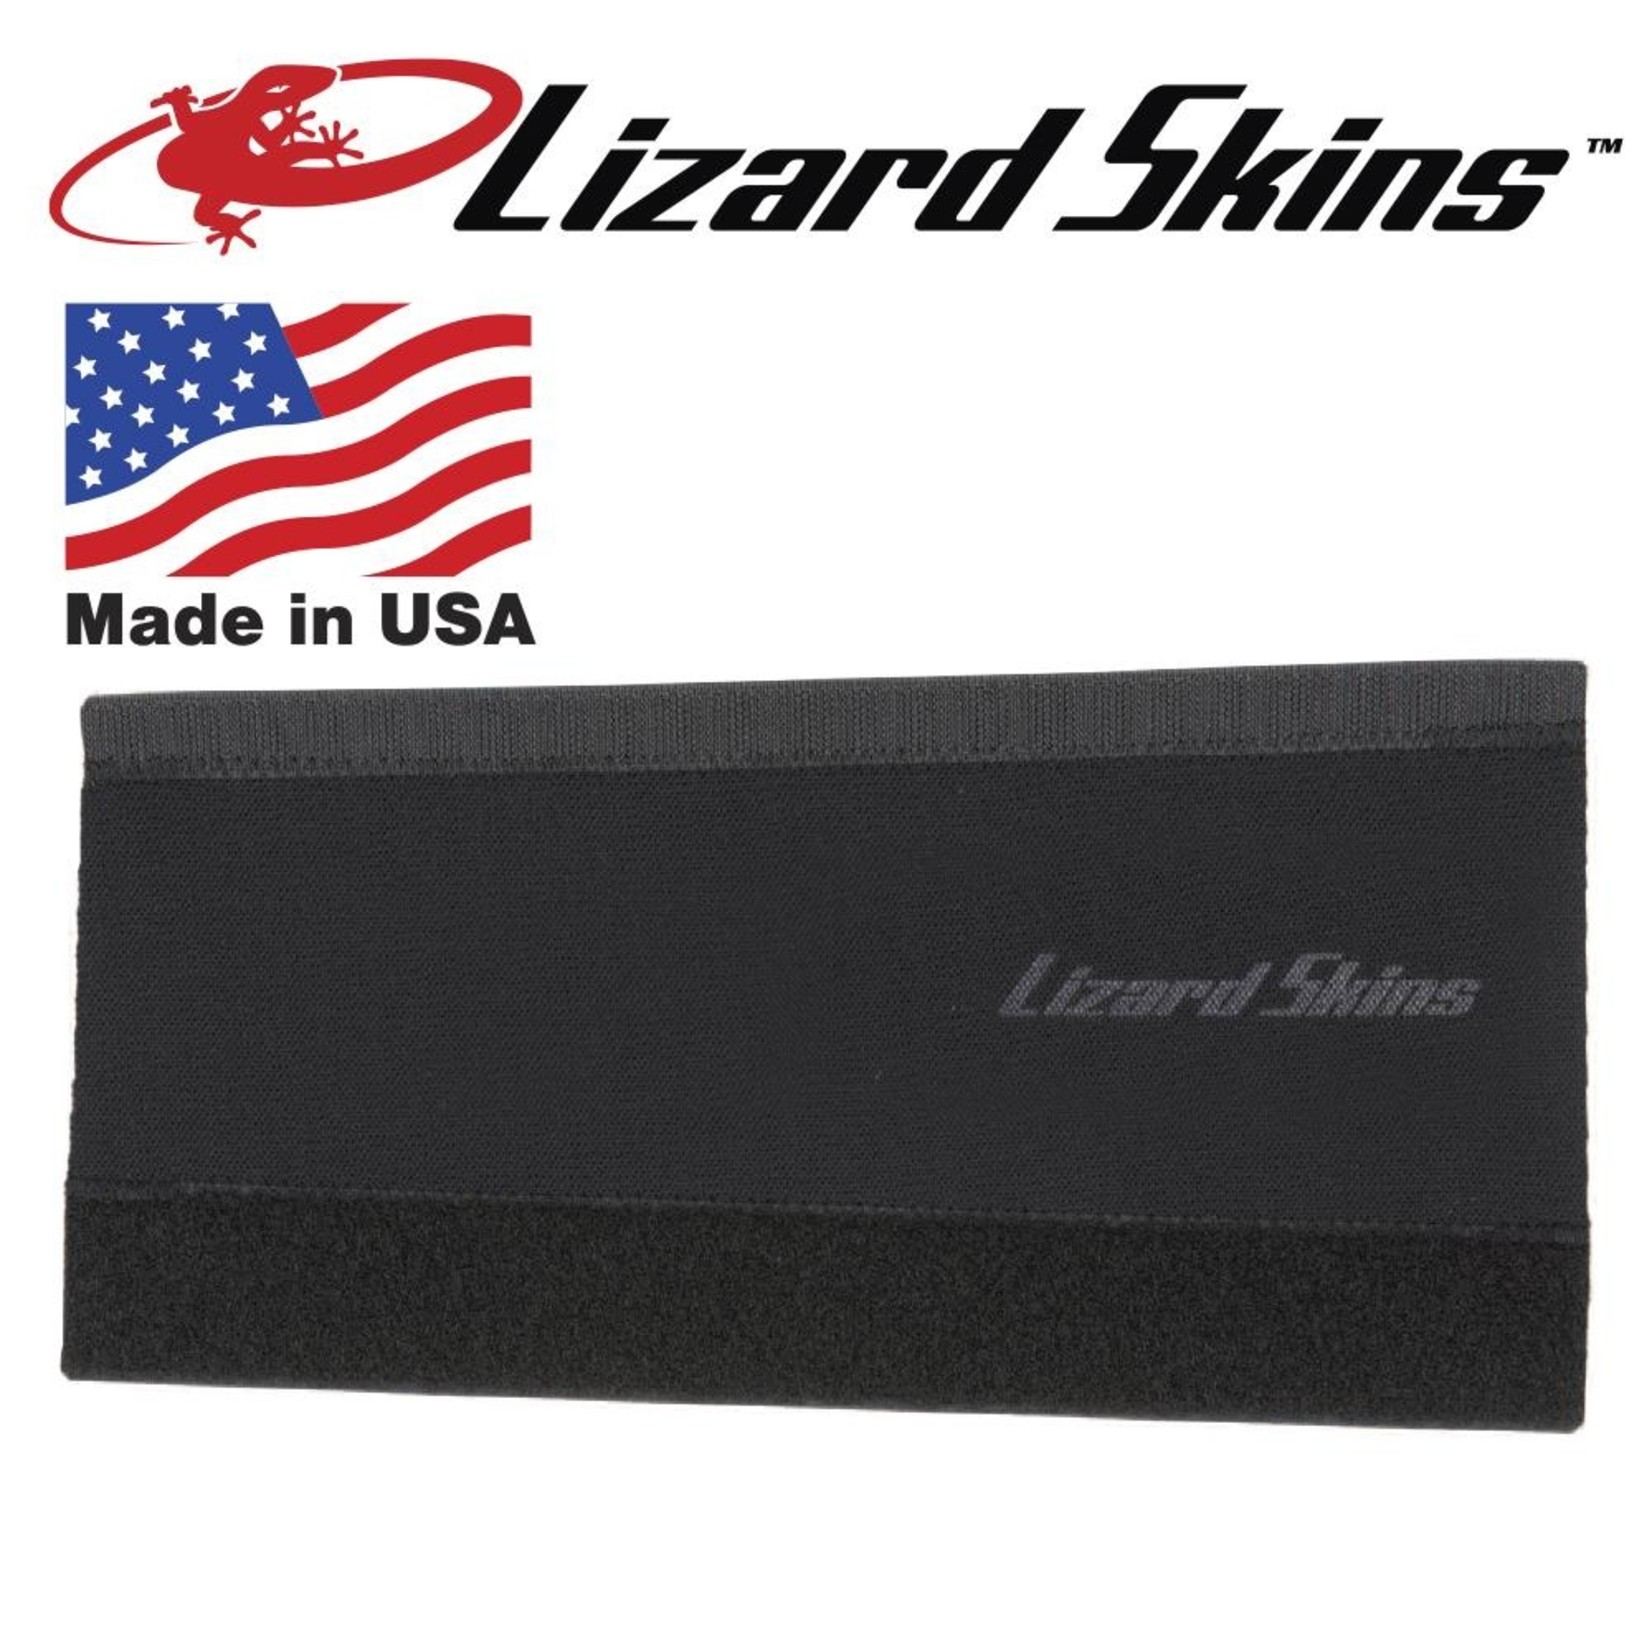 Lizard Skin Lizard Skins Neoprene Chainstay Protectors - 130mm - Medium - Black